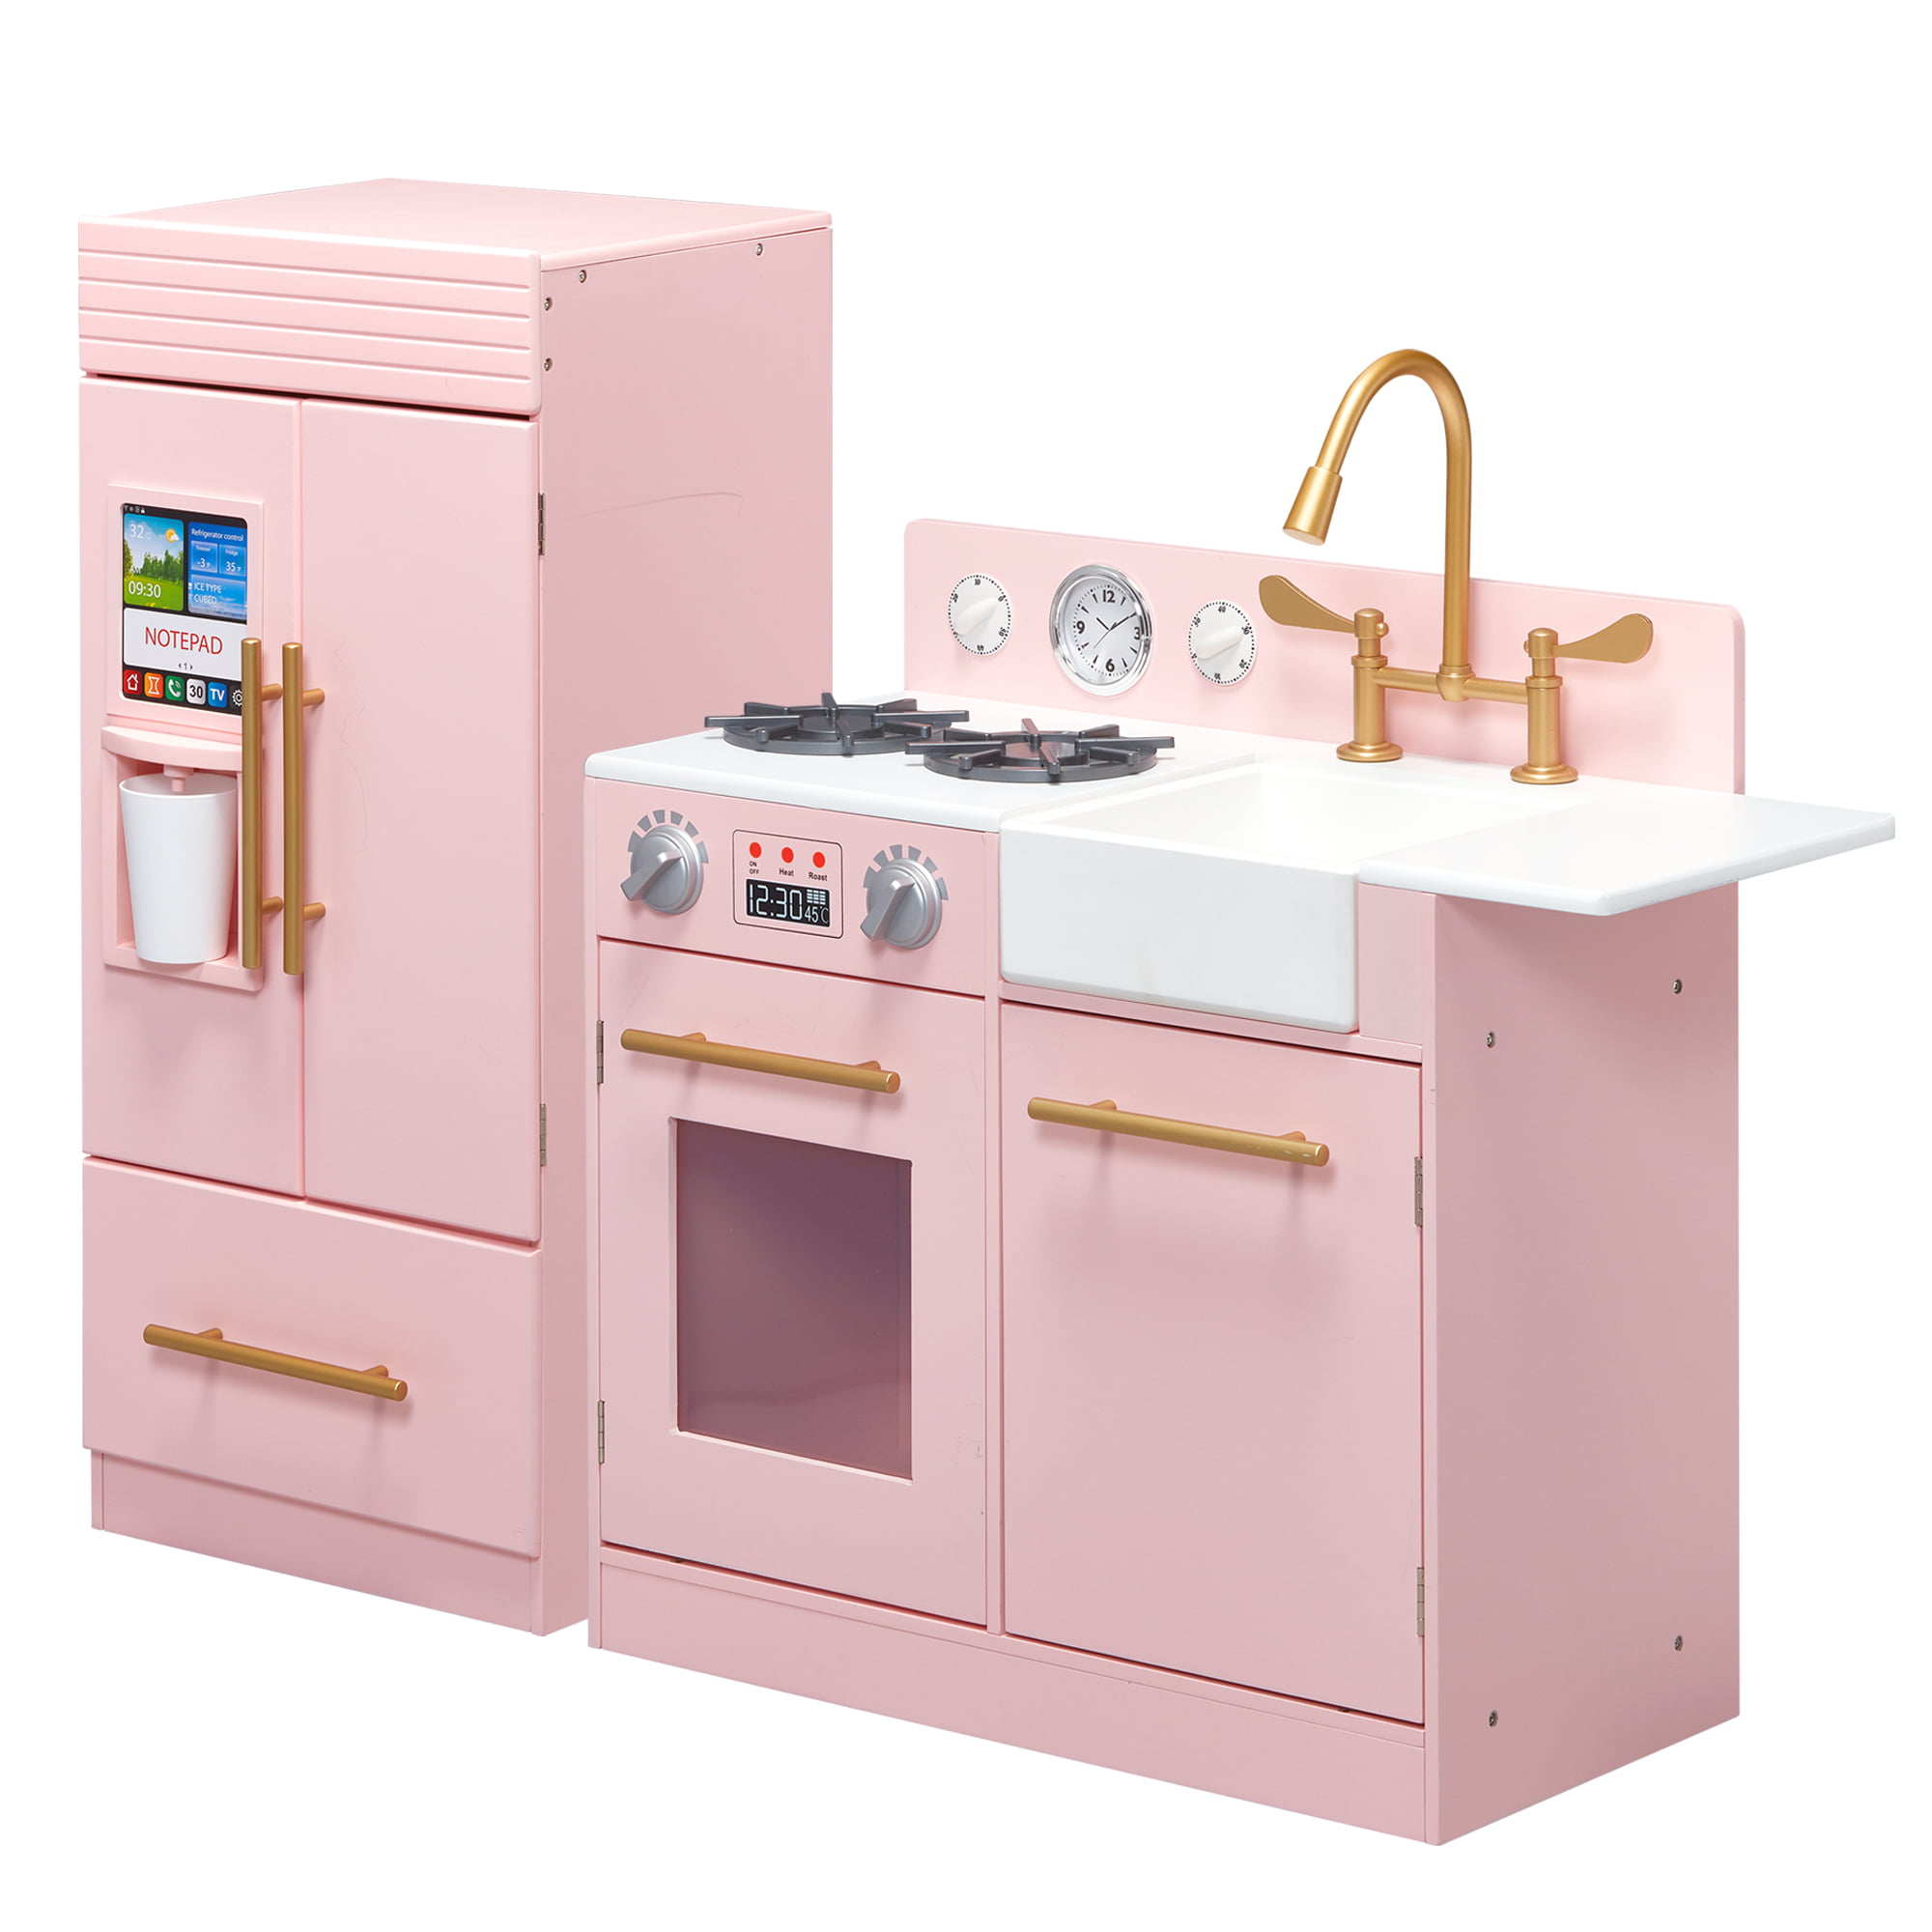 Teamson Kids - Little Chef Chelsea Modern Play Kitchen - Pink / Gold - Walmart.com - Walmart.com